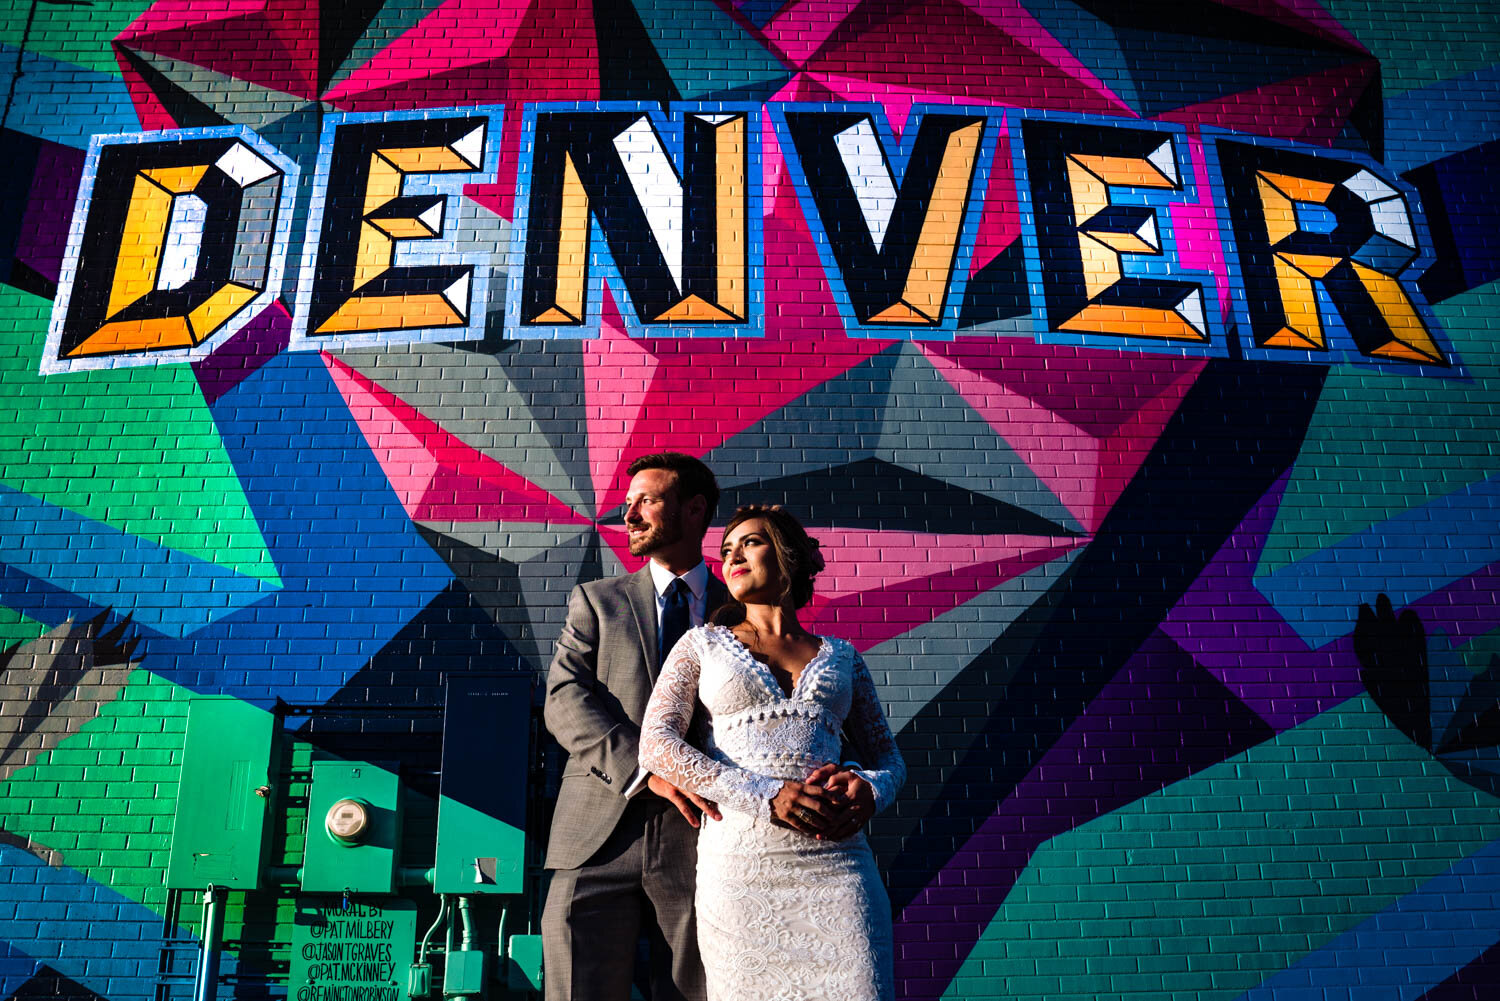  Downtown Denver Graffiti wall by Wedding Photographer JMGant Photography 